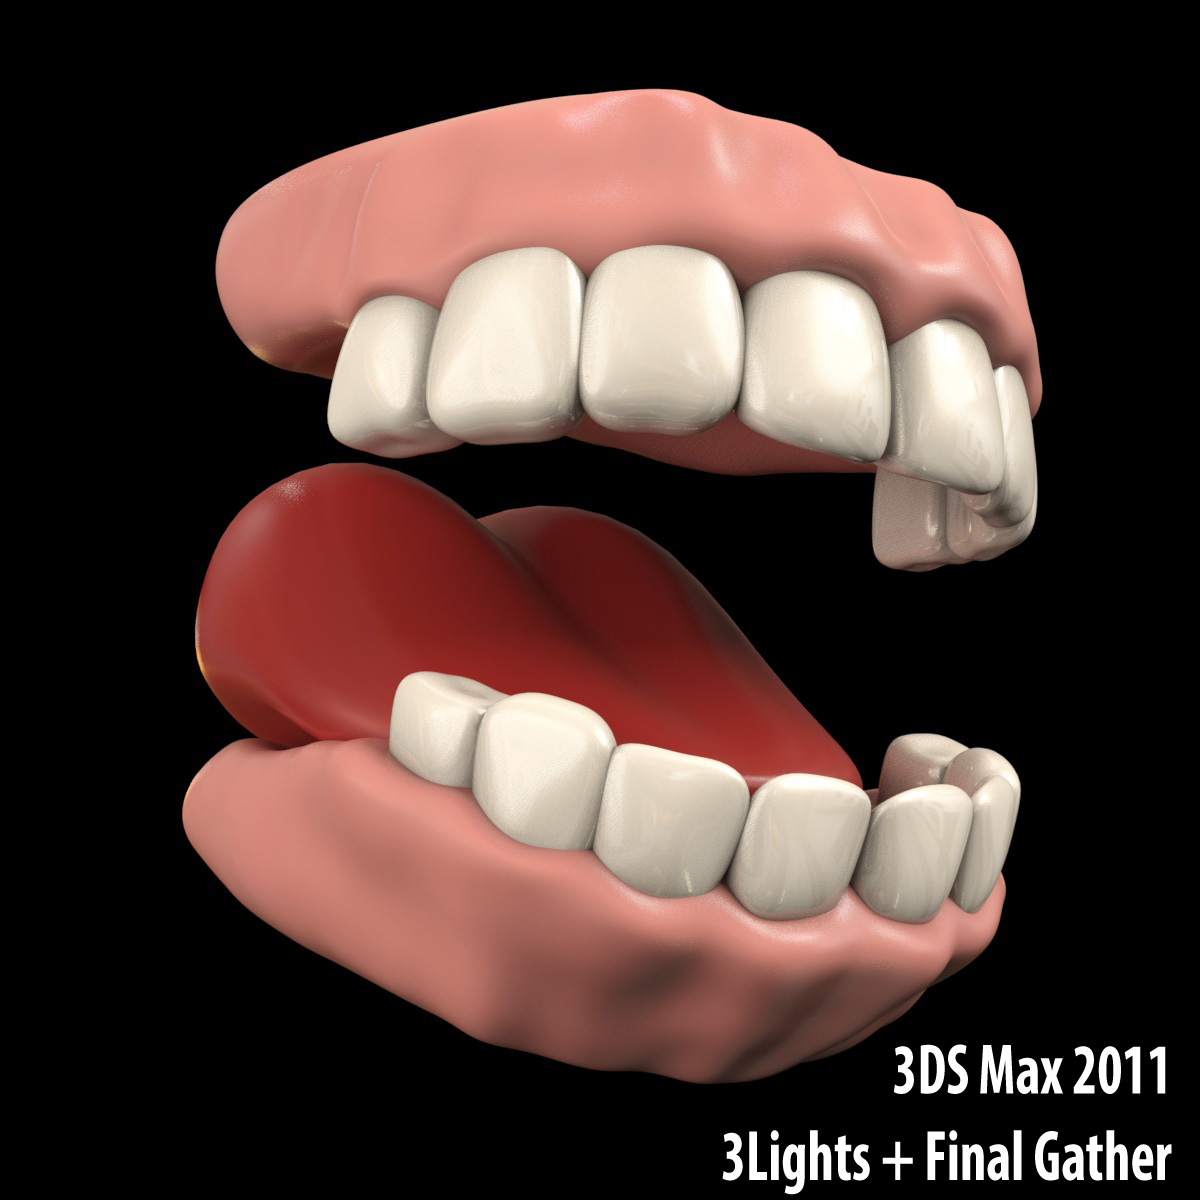 3d model cartoon teeth